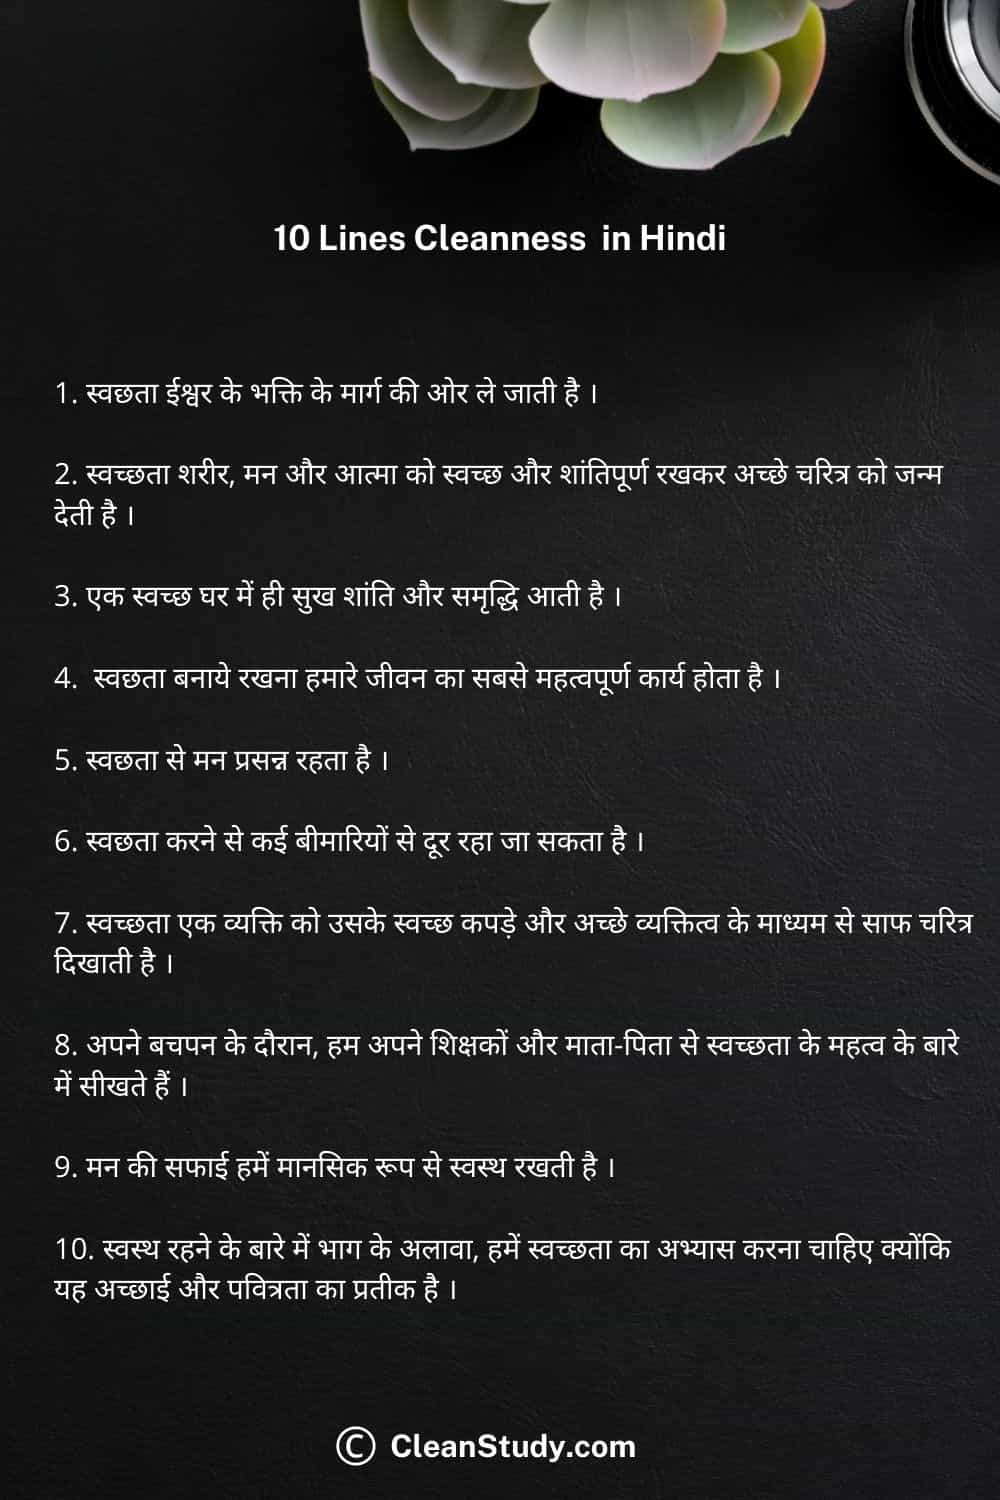 10 lines on food waste in hindi 